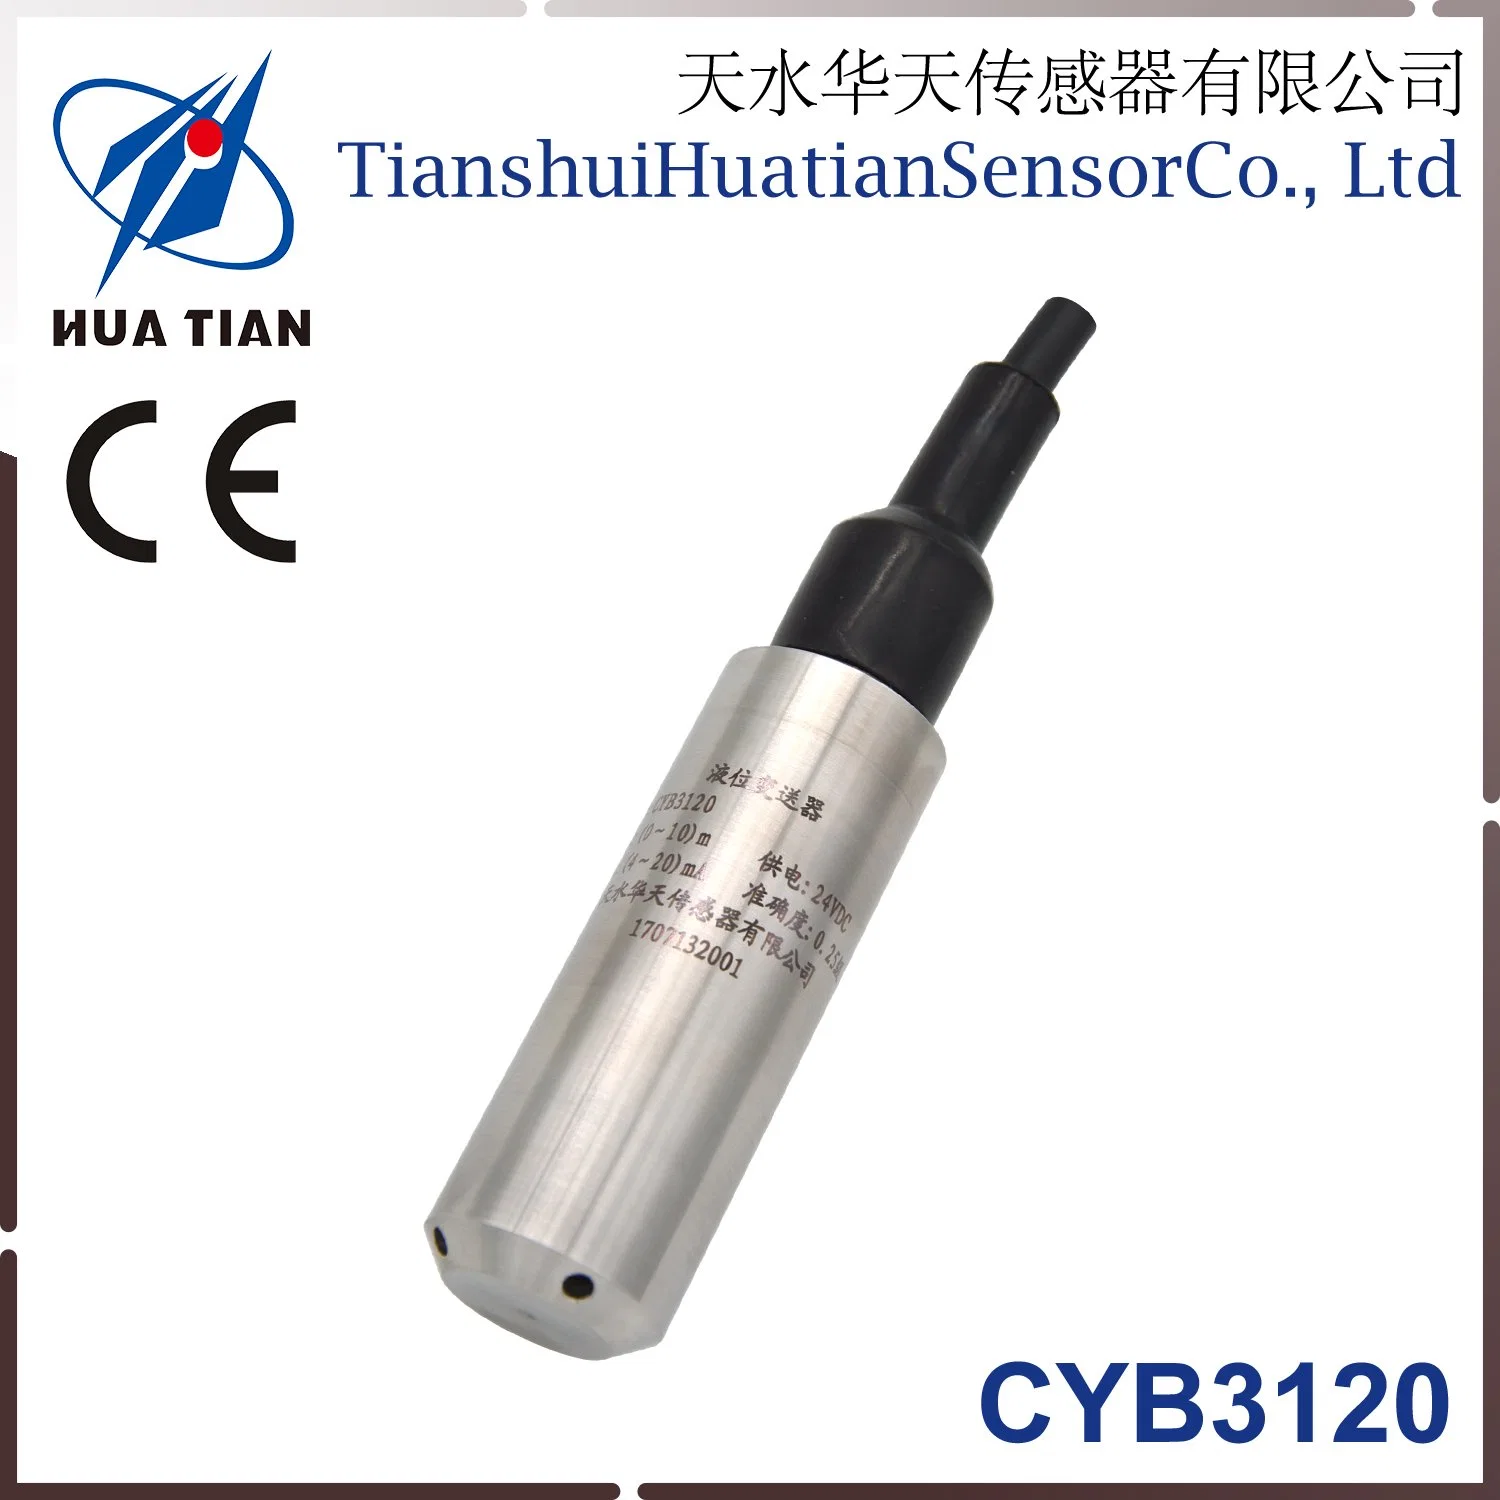 Tianshui Input Type Huatian Meter Level Sensor with Good Service Cyb3120